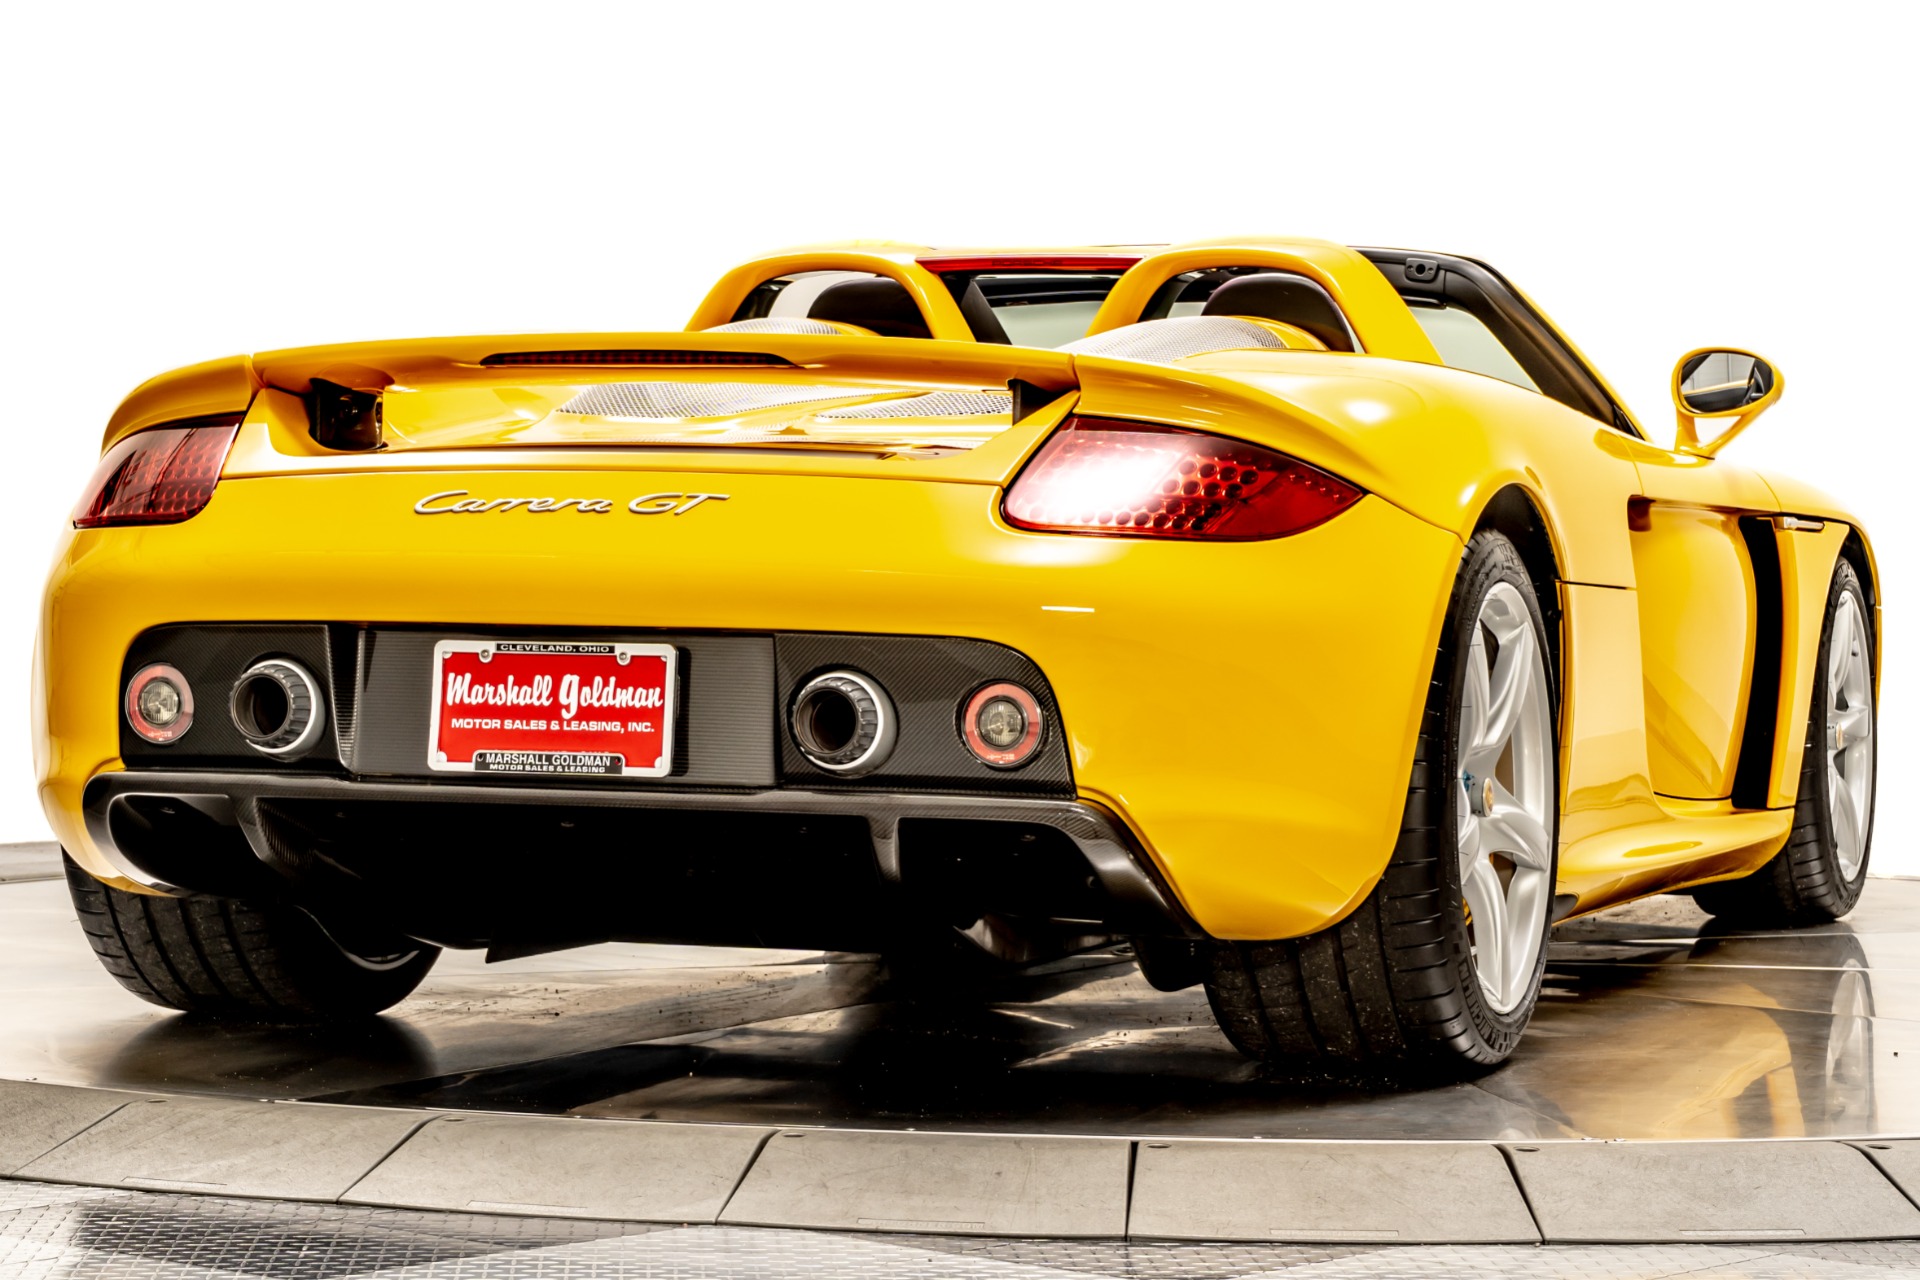 Porsche 935 GT2 - Carrera car database - SmartRace for Carrera Digital